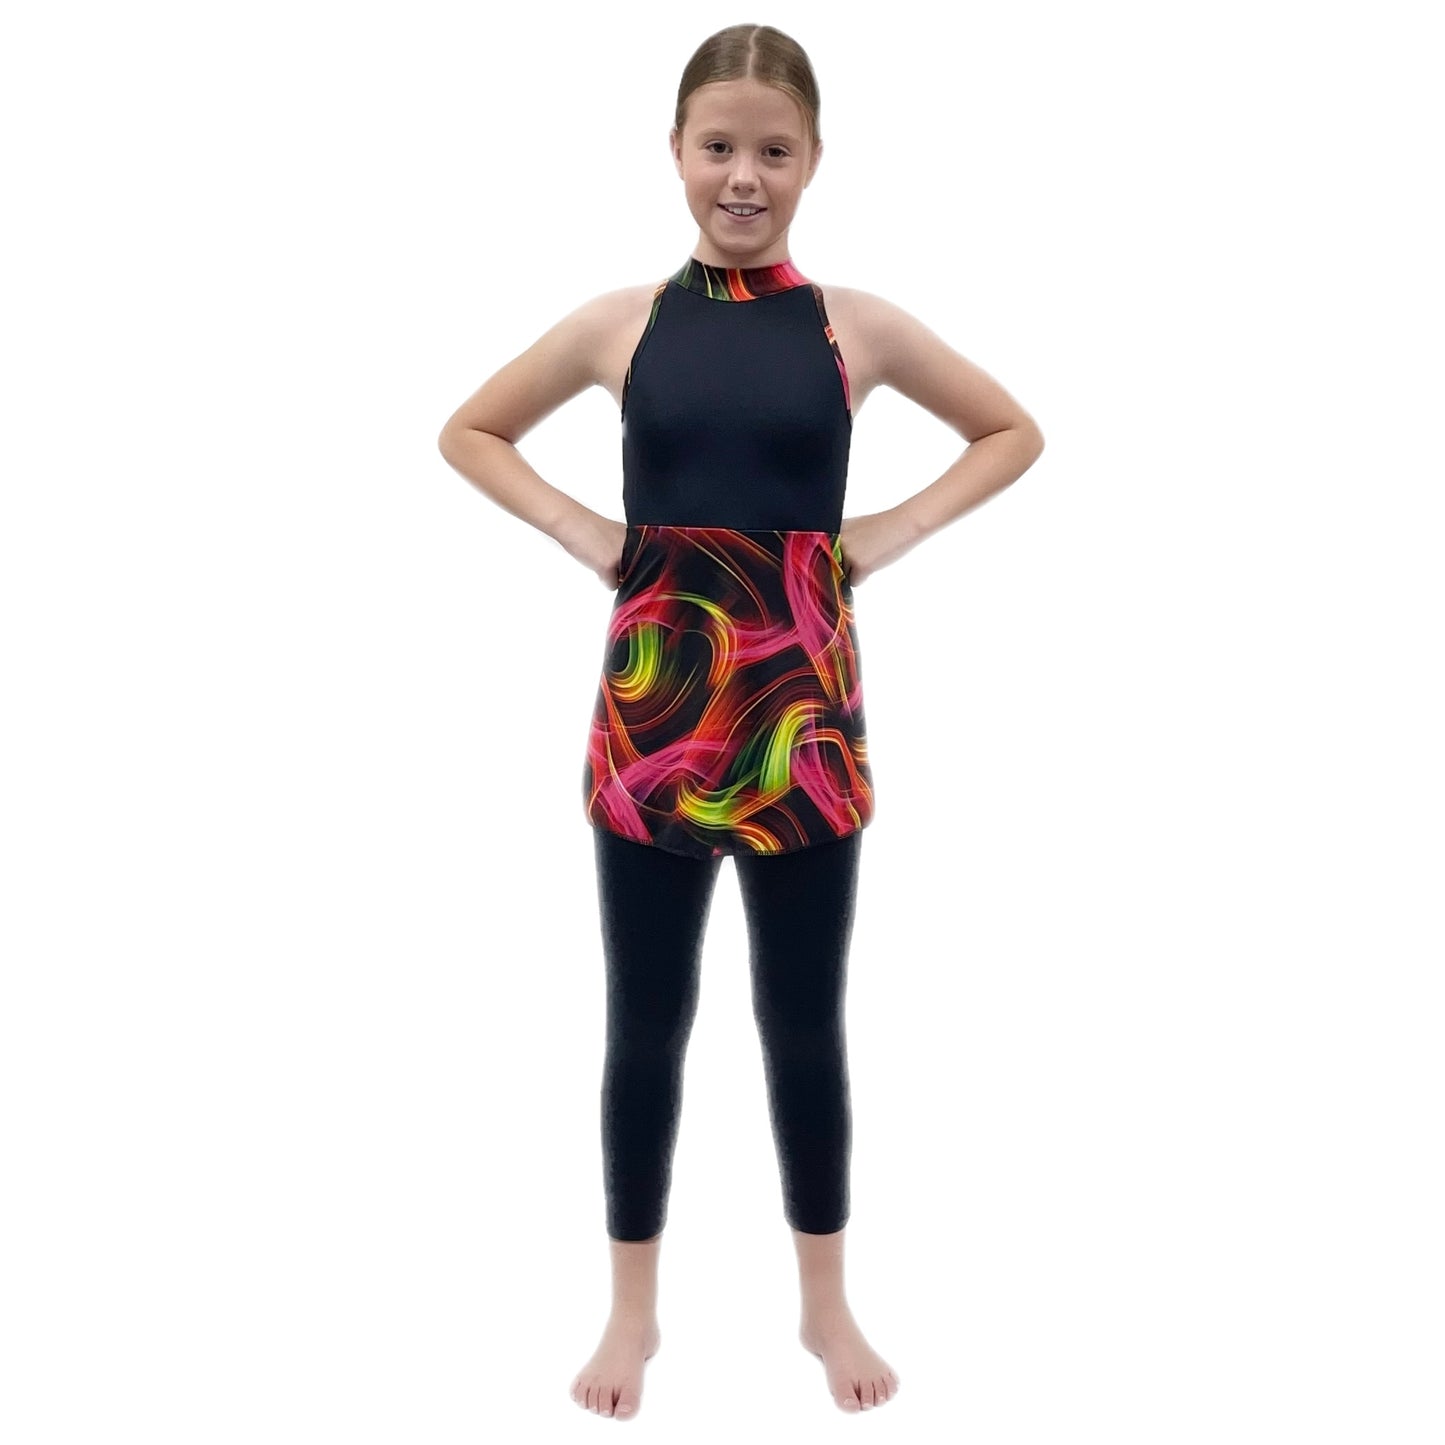 Black Catsuit with Multi Print Skirt & Binding | Razzle Dazzle Dance Costumes